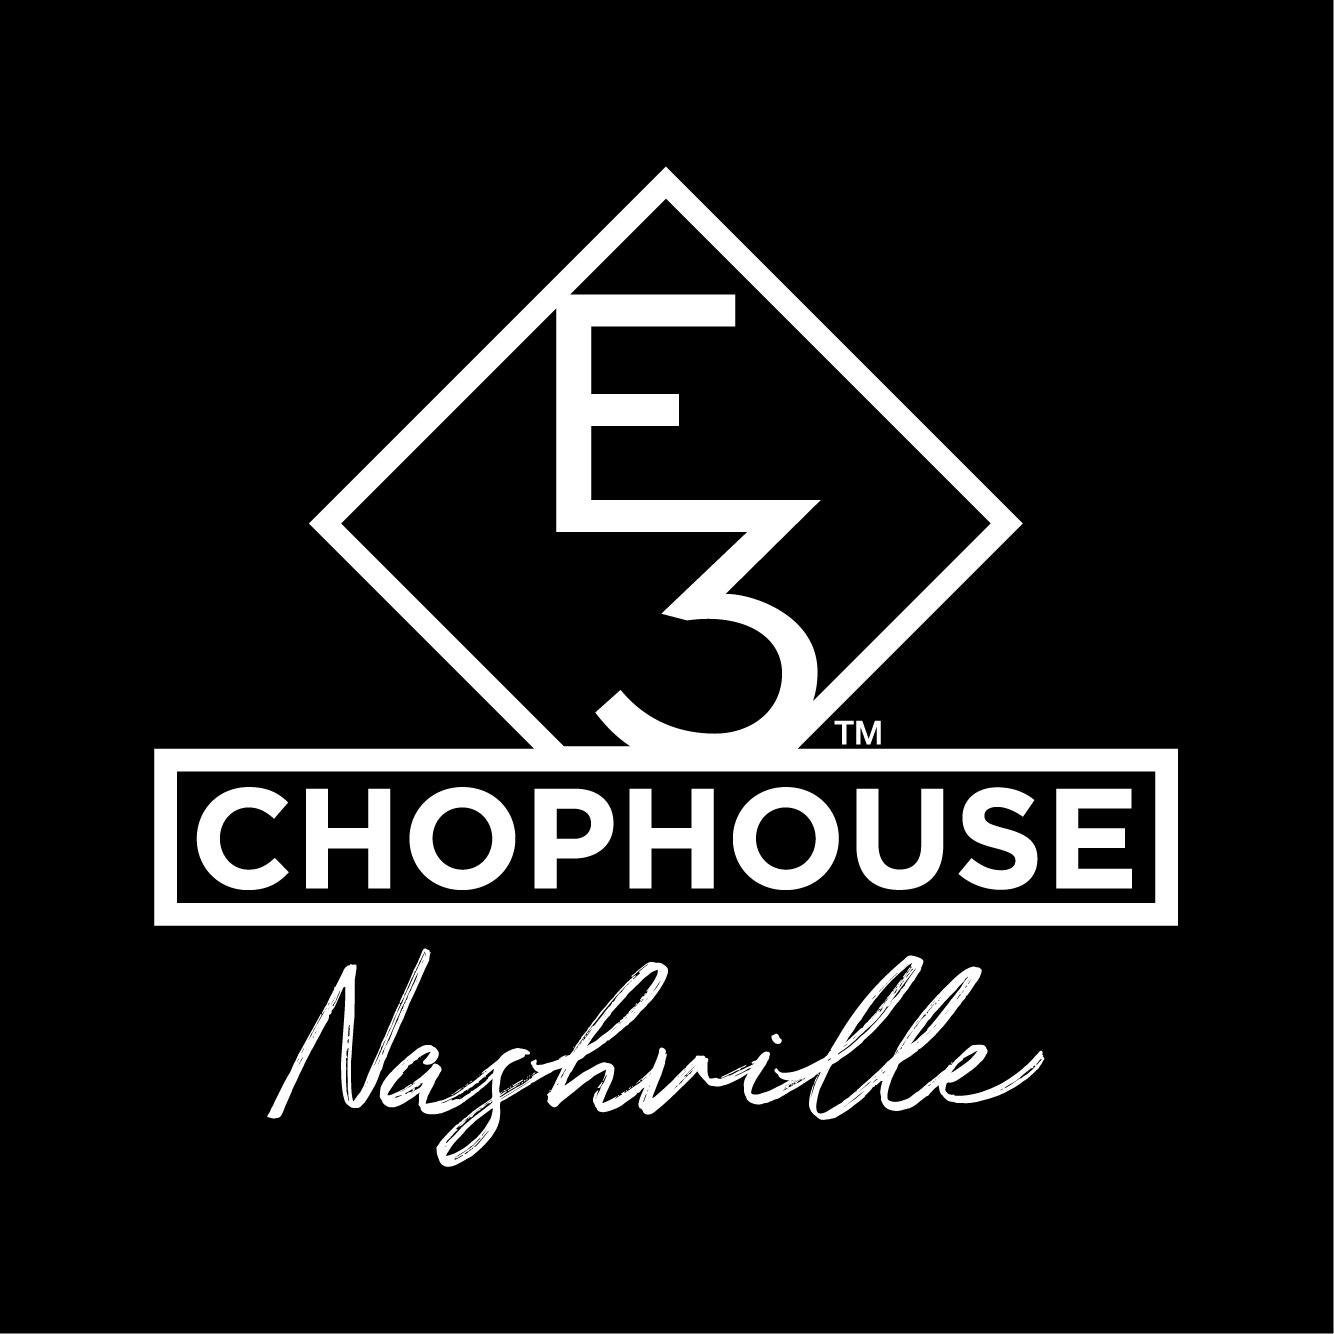 E3 Chophouse - Nashville, TN 37212 - (615)301-1818 | ShowMeLocal.com